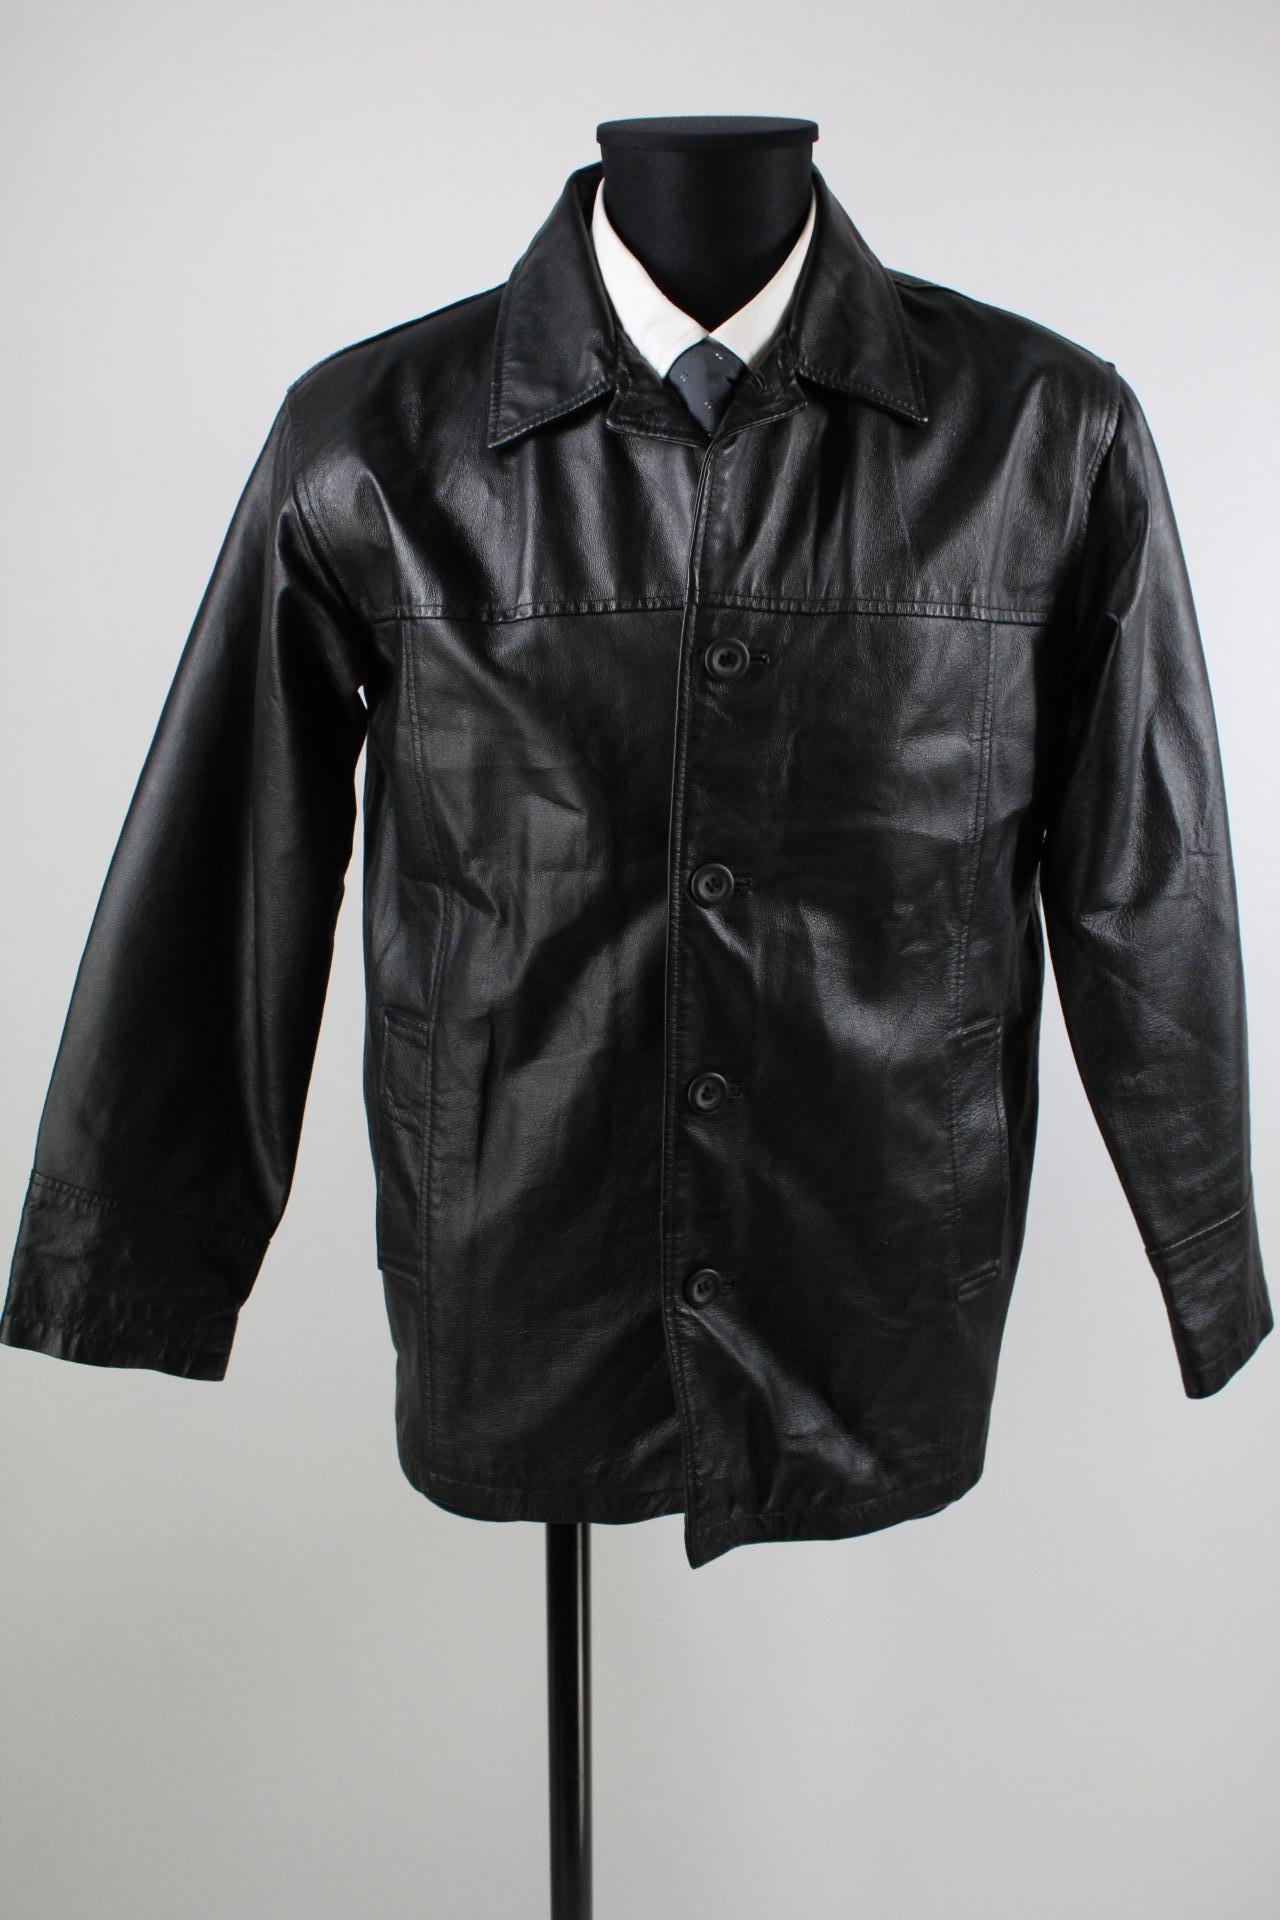 Leder Classic Jackets Herren-Lederjacke schwarz Größe 43